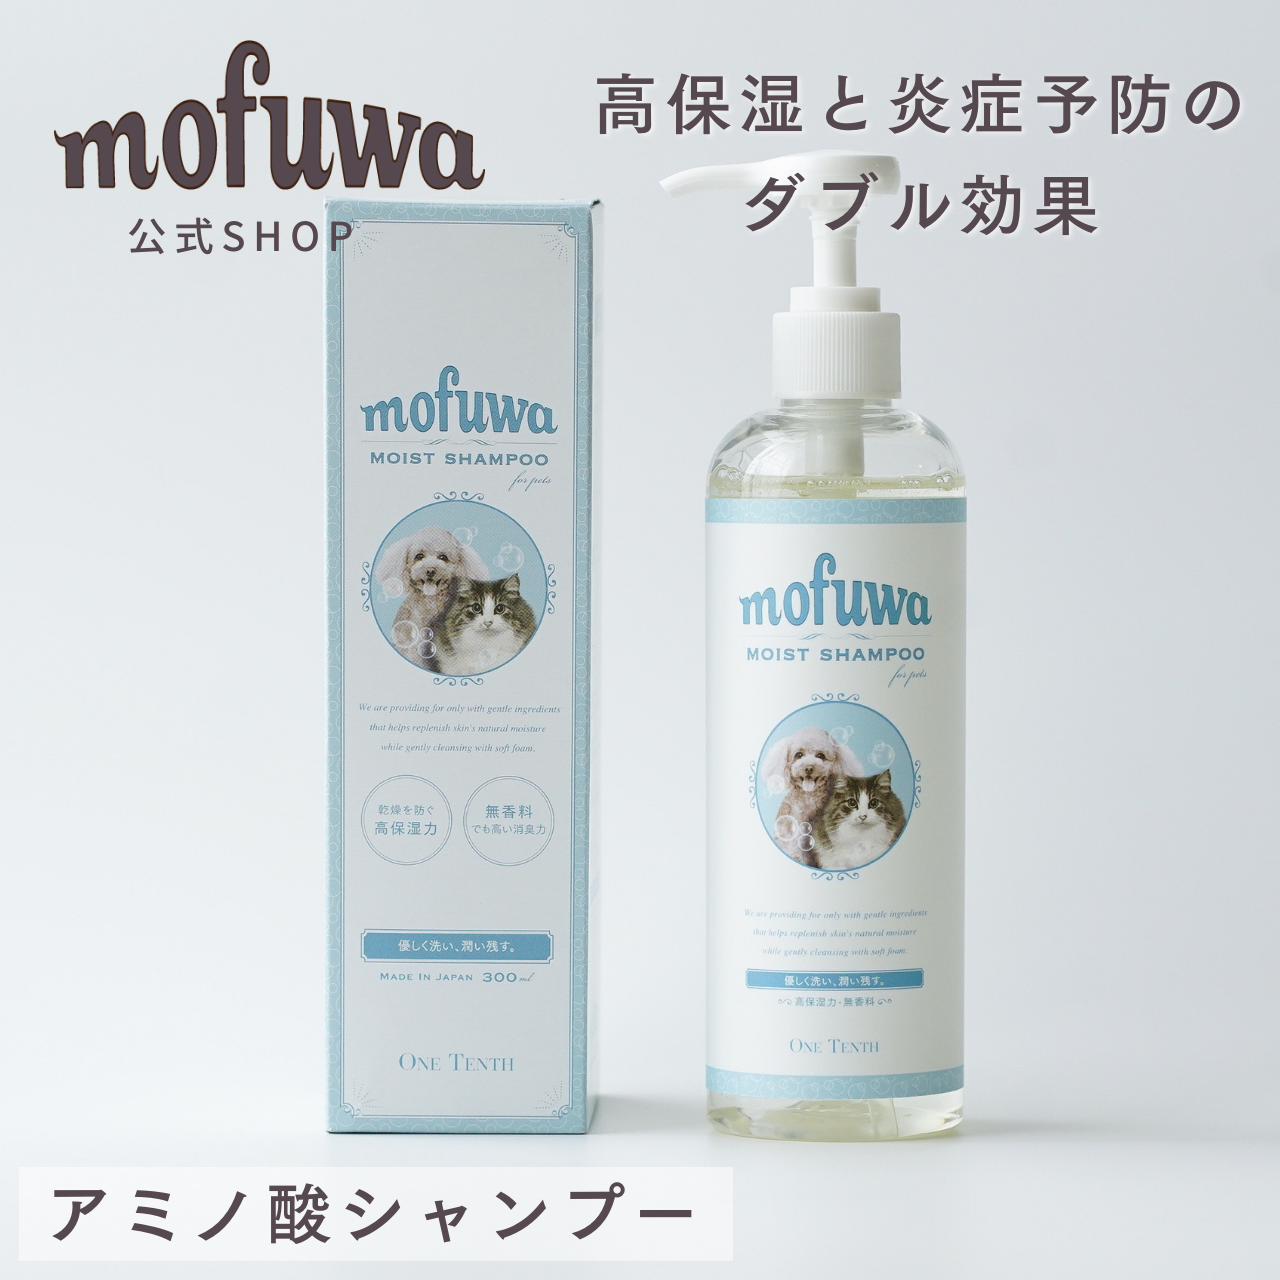 mofuwa モイスト シャンプー 無香料 300ml ×2本